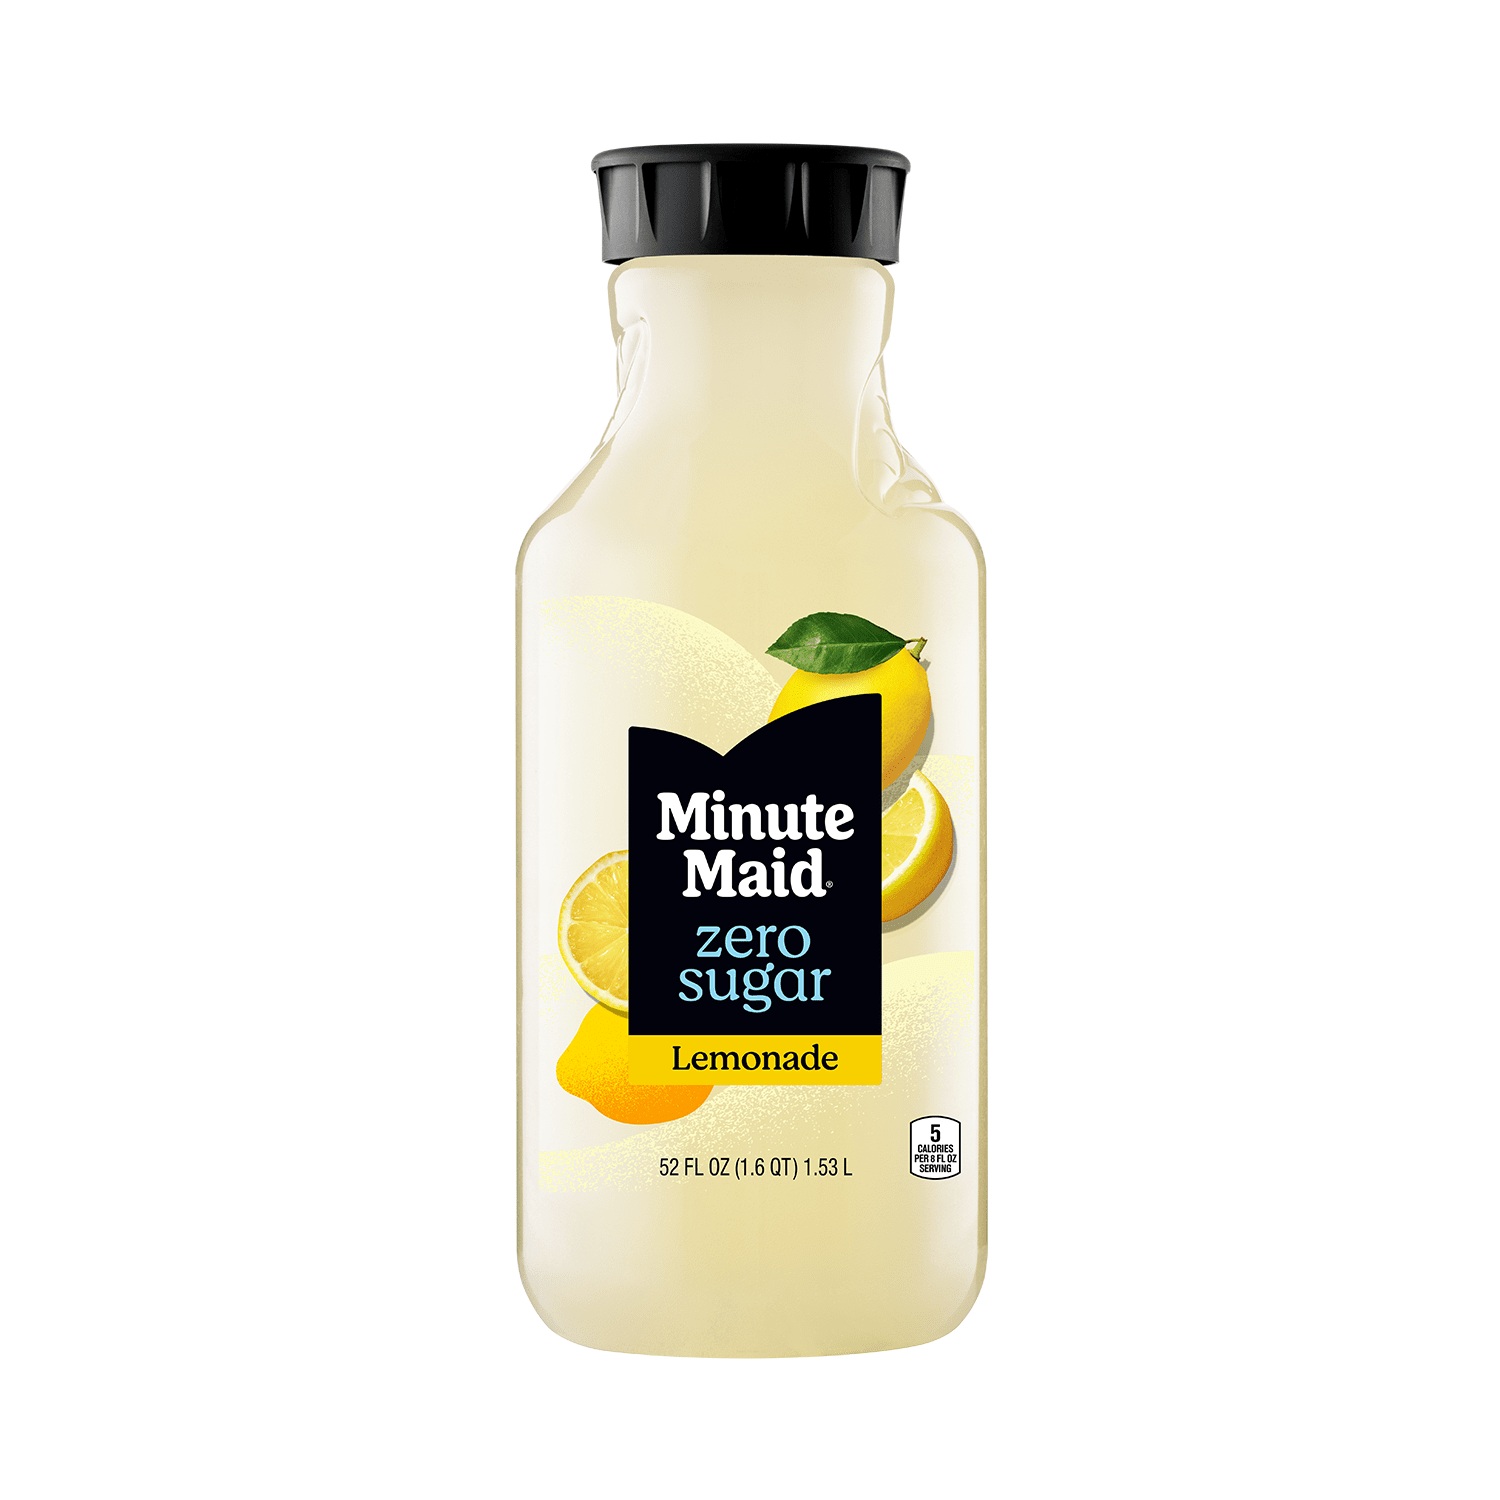 Minute Maid Zero Sugar Lemonade bottle